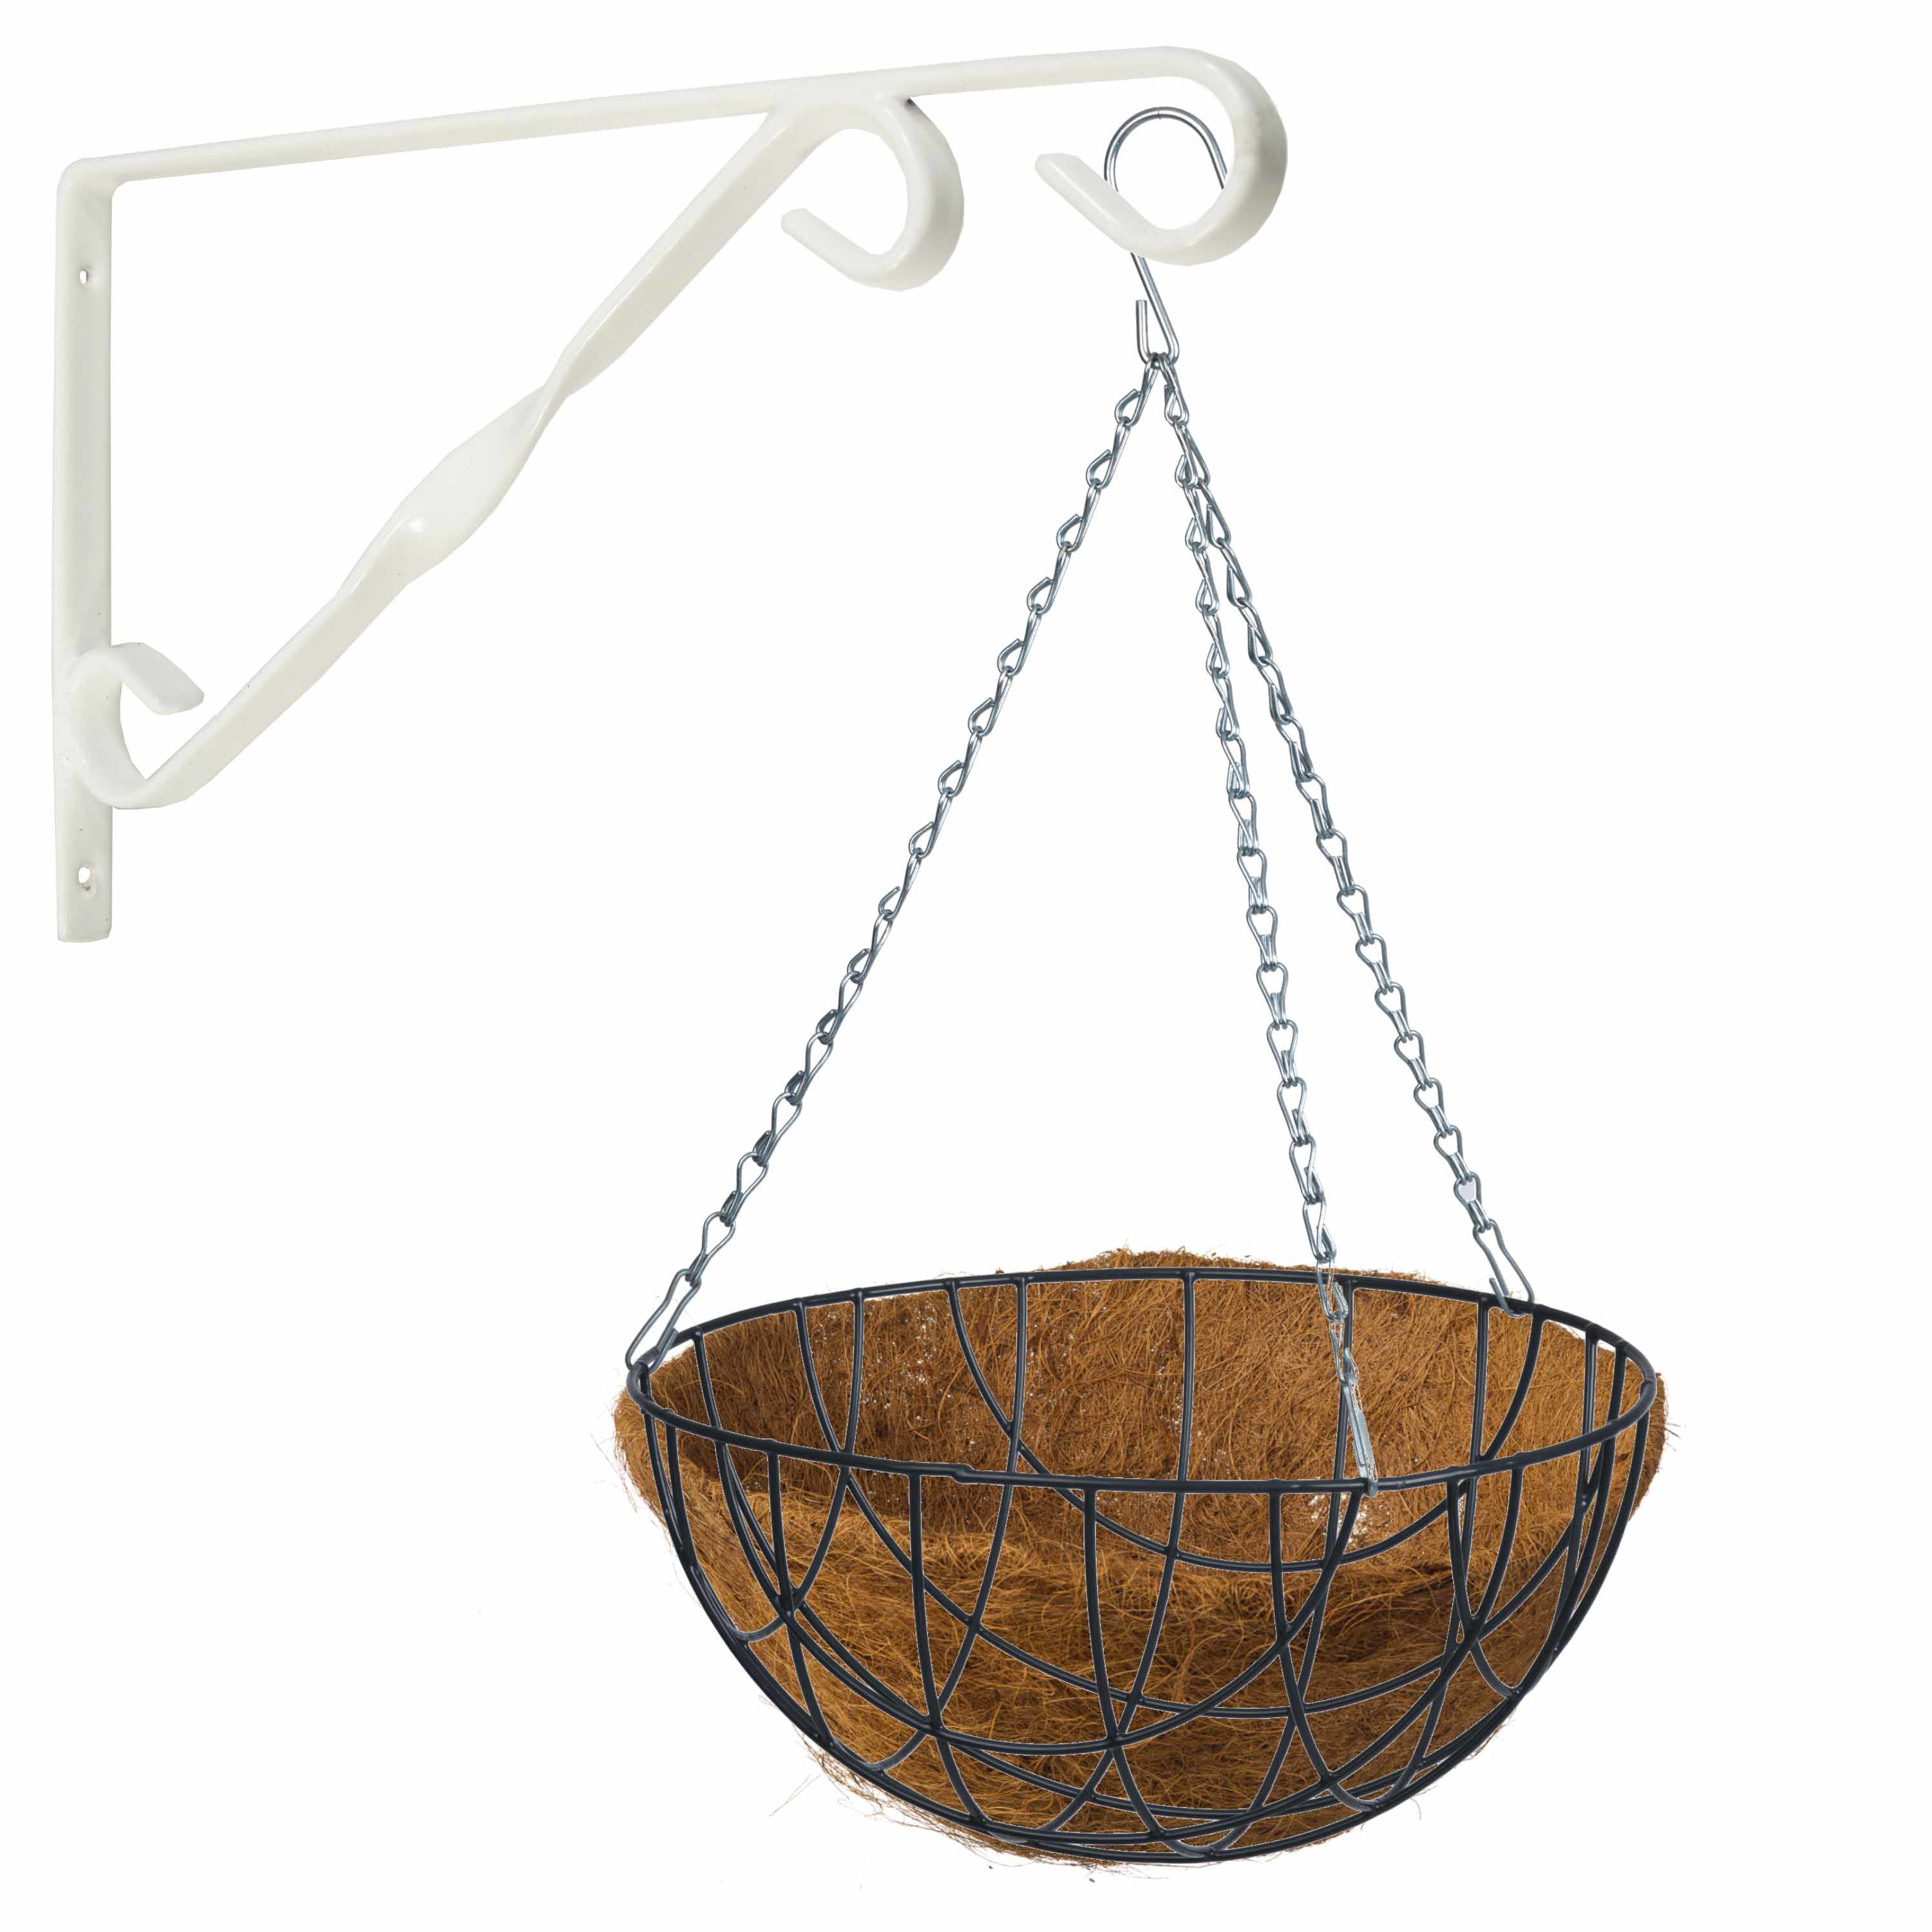 Hanging basket 40 cm met klassieke muurhaak wit en kokos inlegvel metaal complete hangmand set